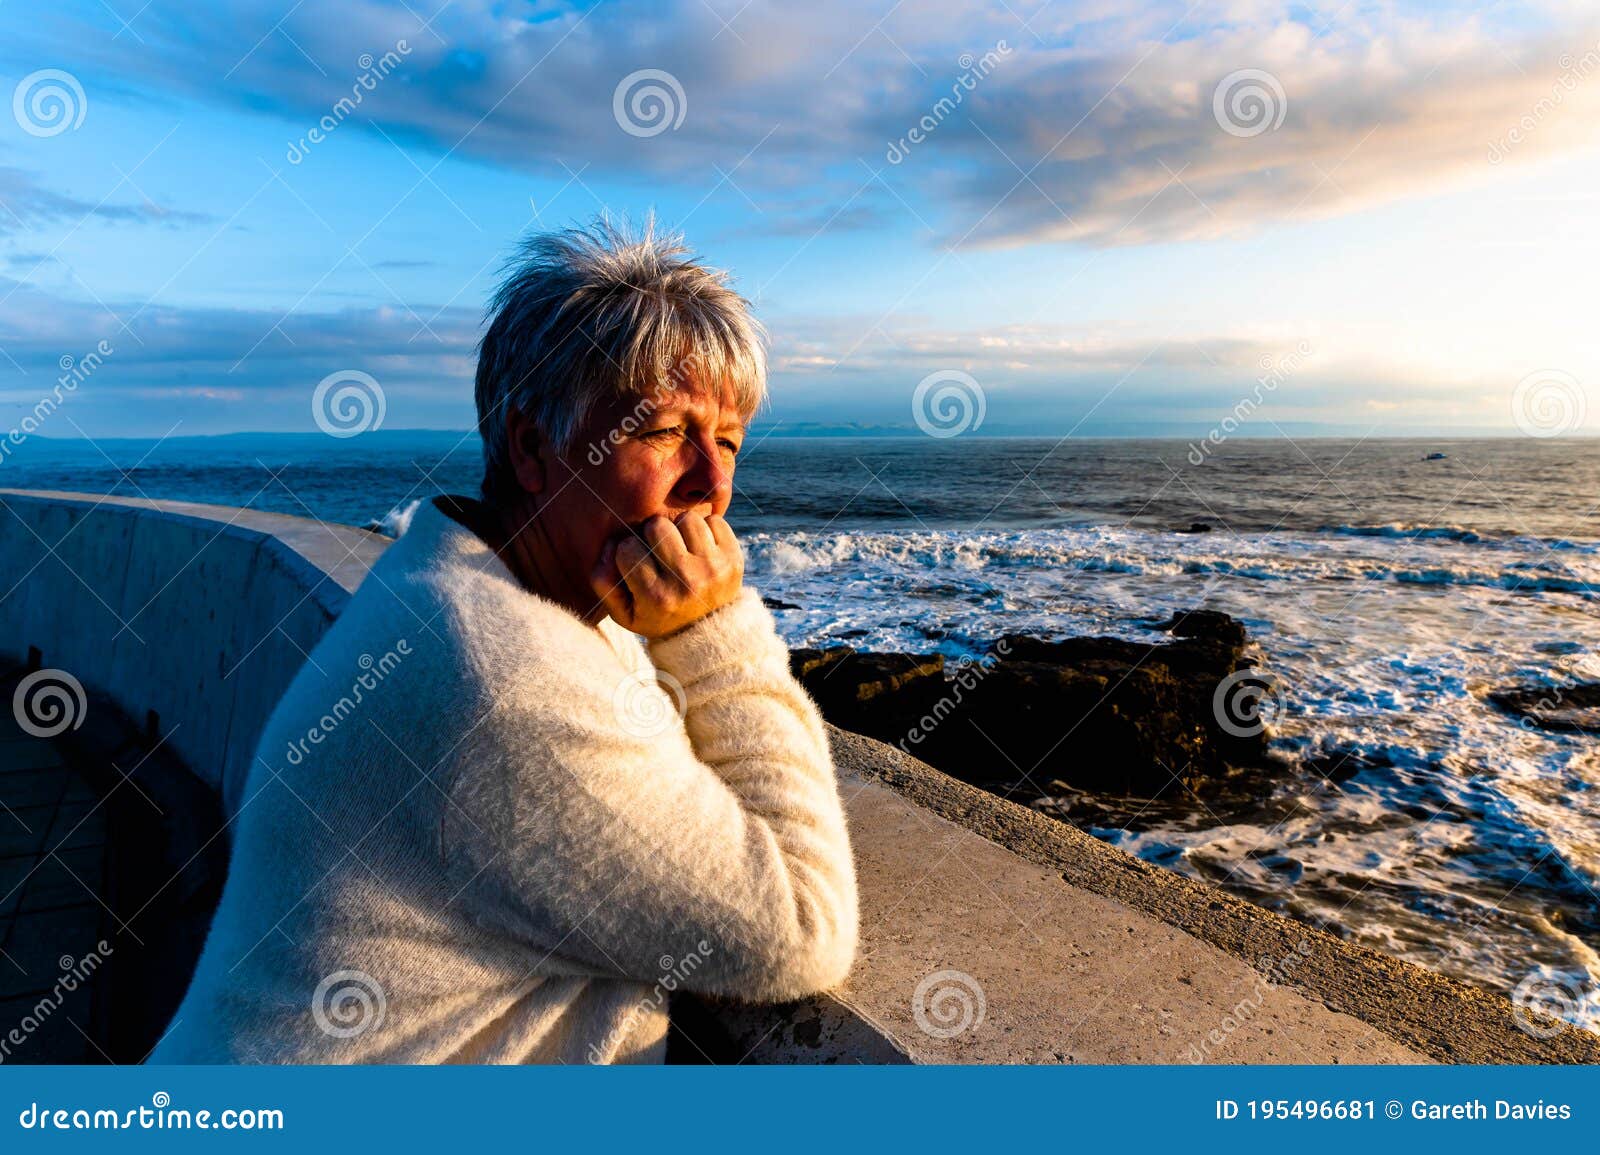 elderly women overlooking ocean sunset at porthcawl.